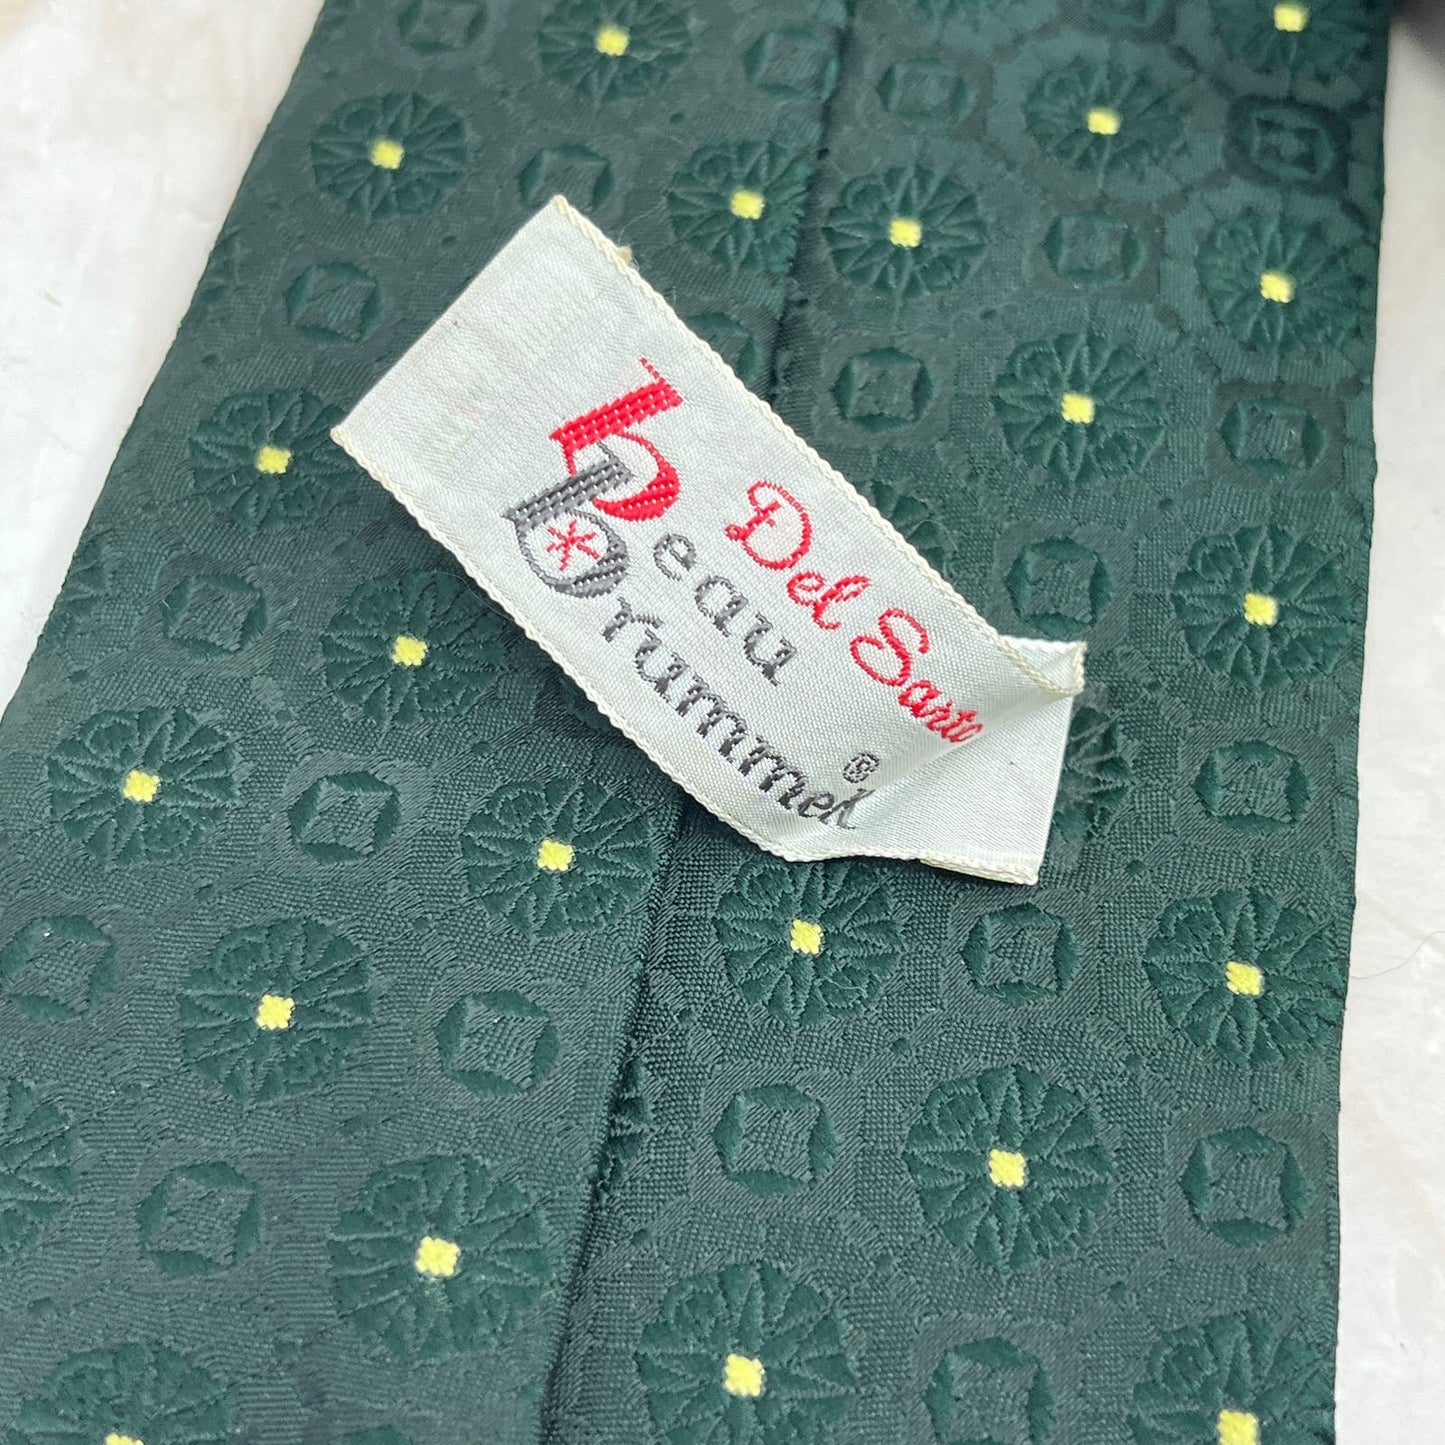 Retro Men's Del Sato Beau Brummell Polyester Green Necktie Tie TJ4-T2